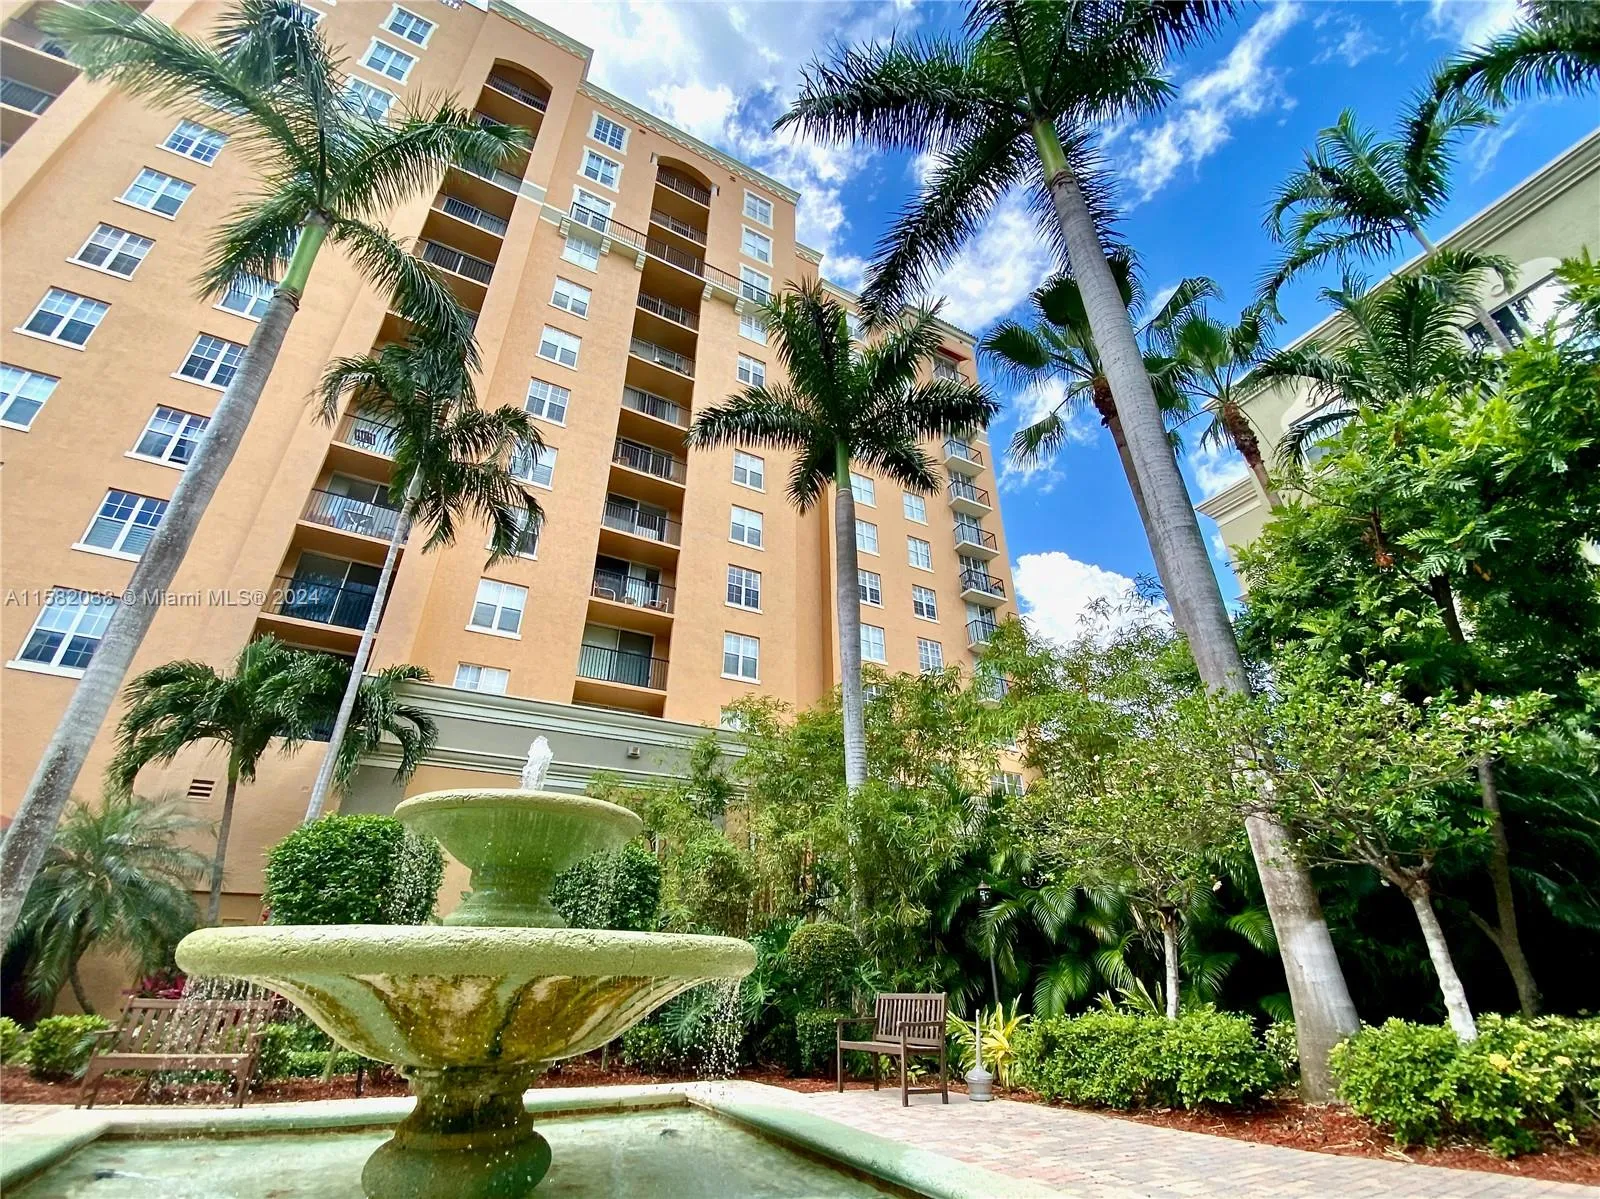 The Tower Condominium, West Palm Beach.  The Courtyard.
651 Okeechobee Blvd., #206, West Palm Beach, Florida.